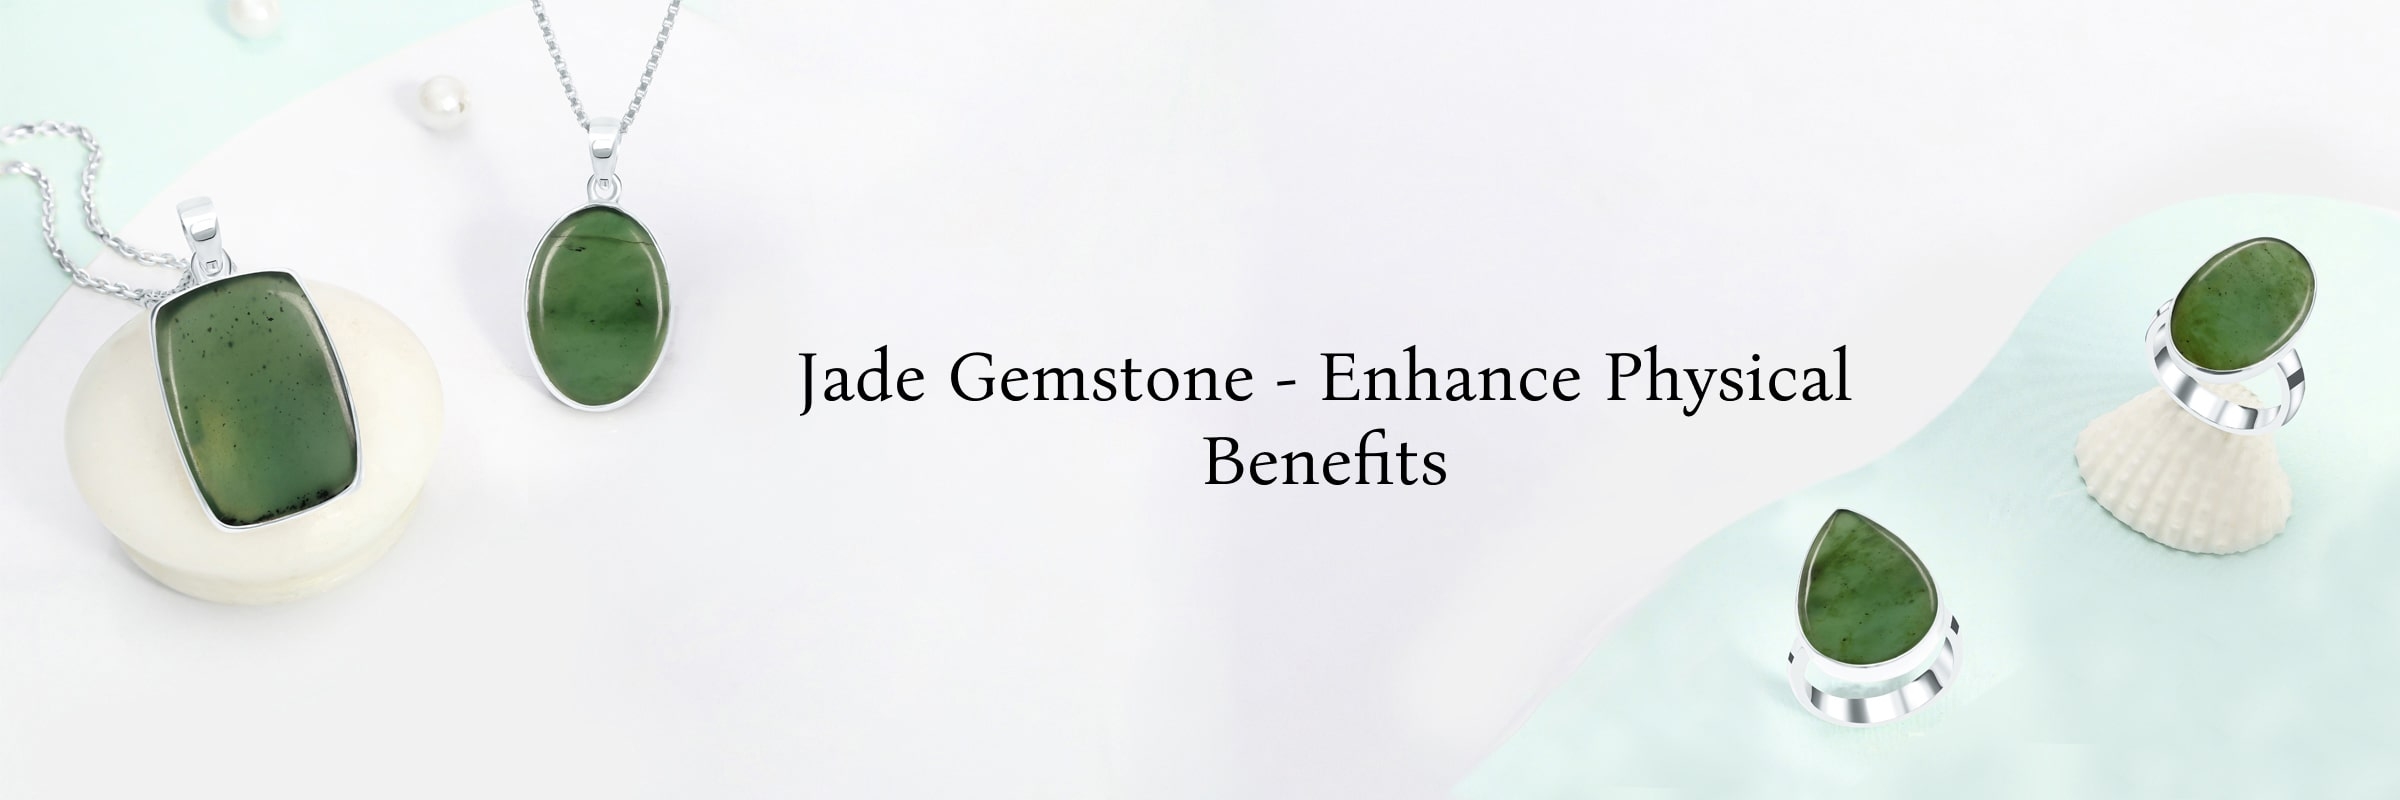 Benefits of Wearing Jade Gemstone